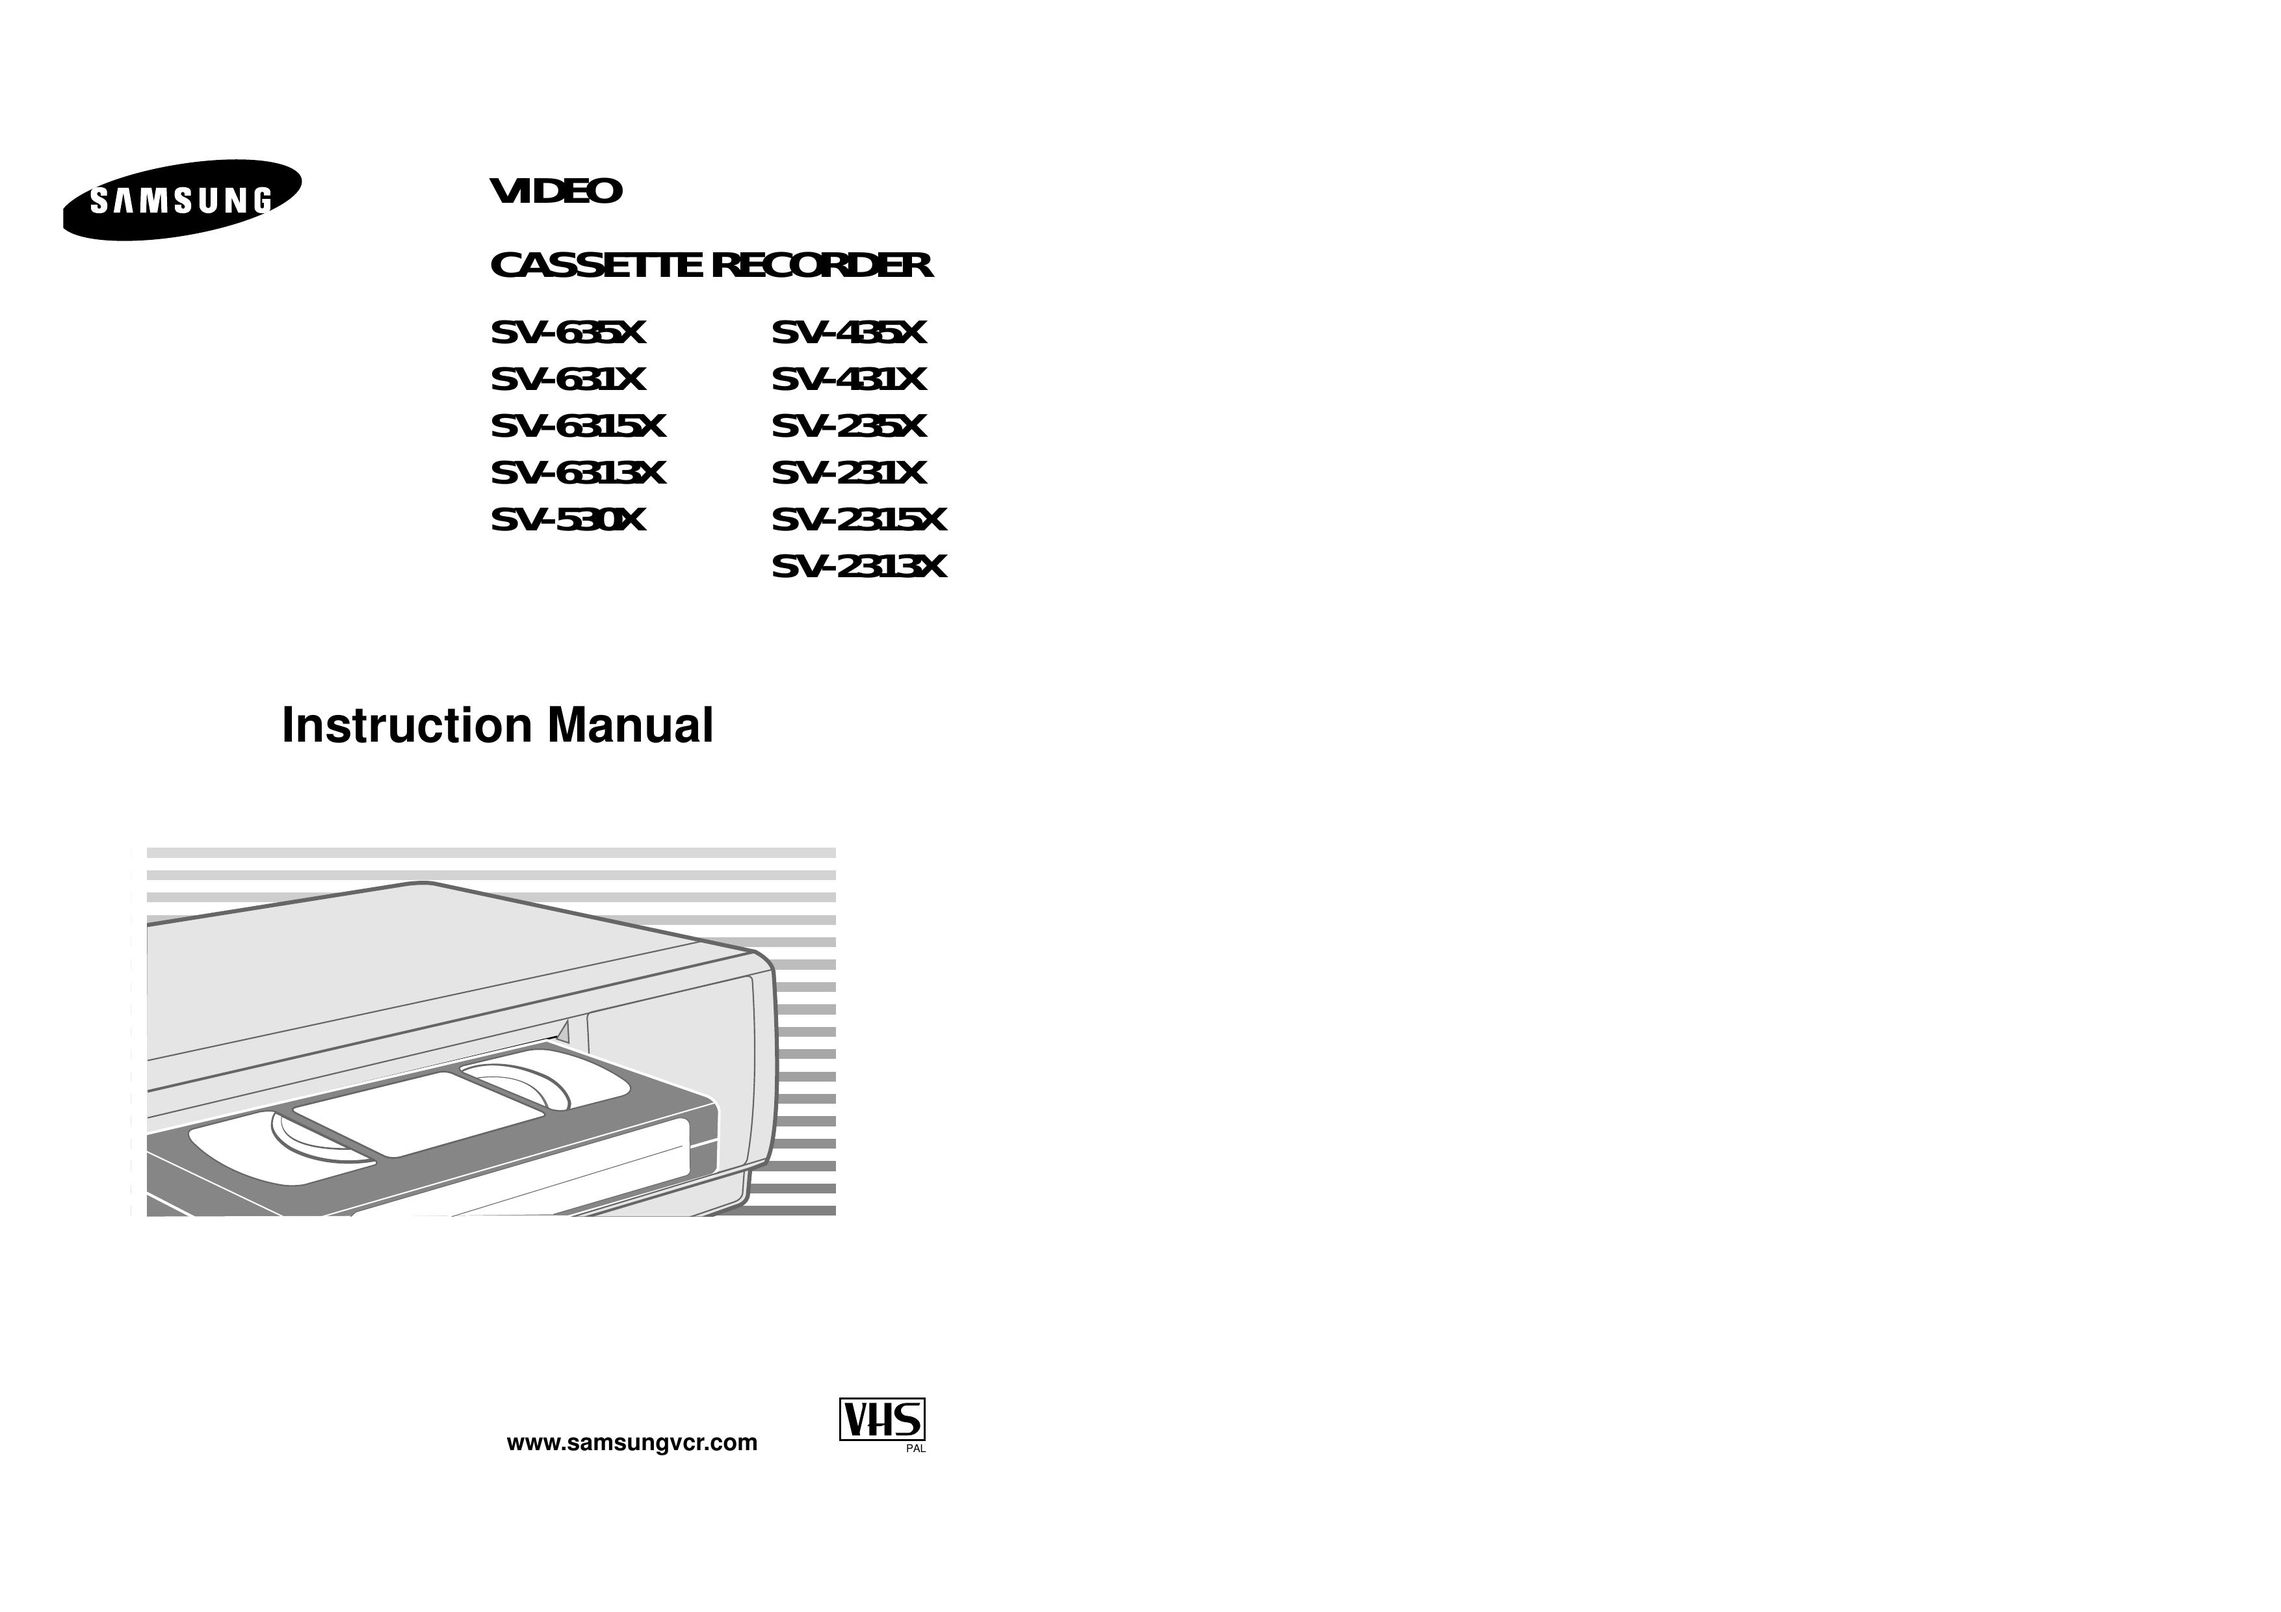 Samsung SV-6315X Cassette Player User Manual